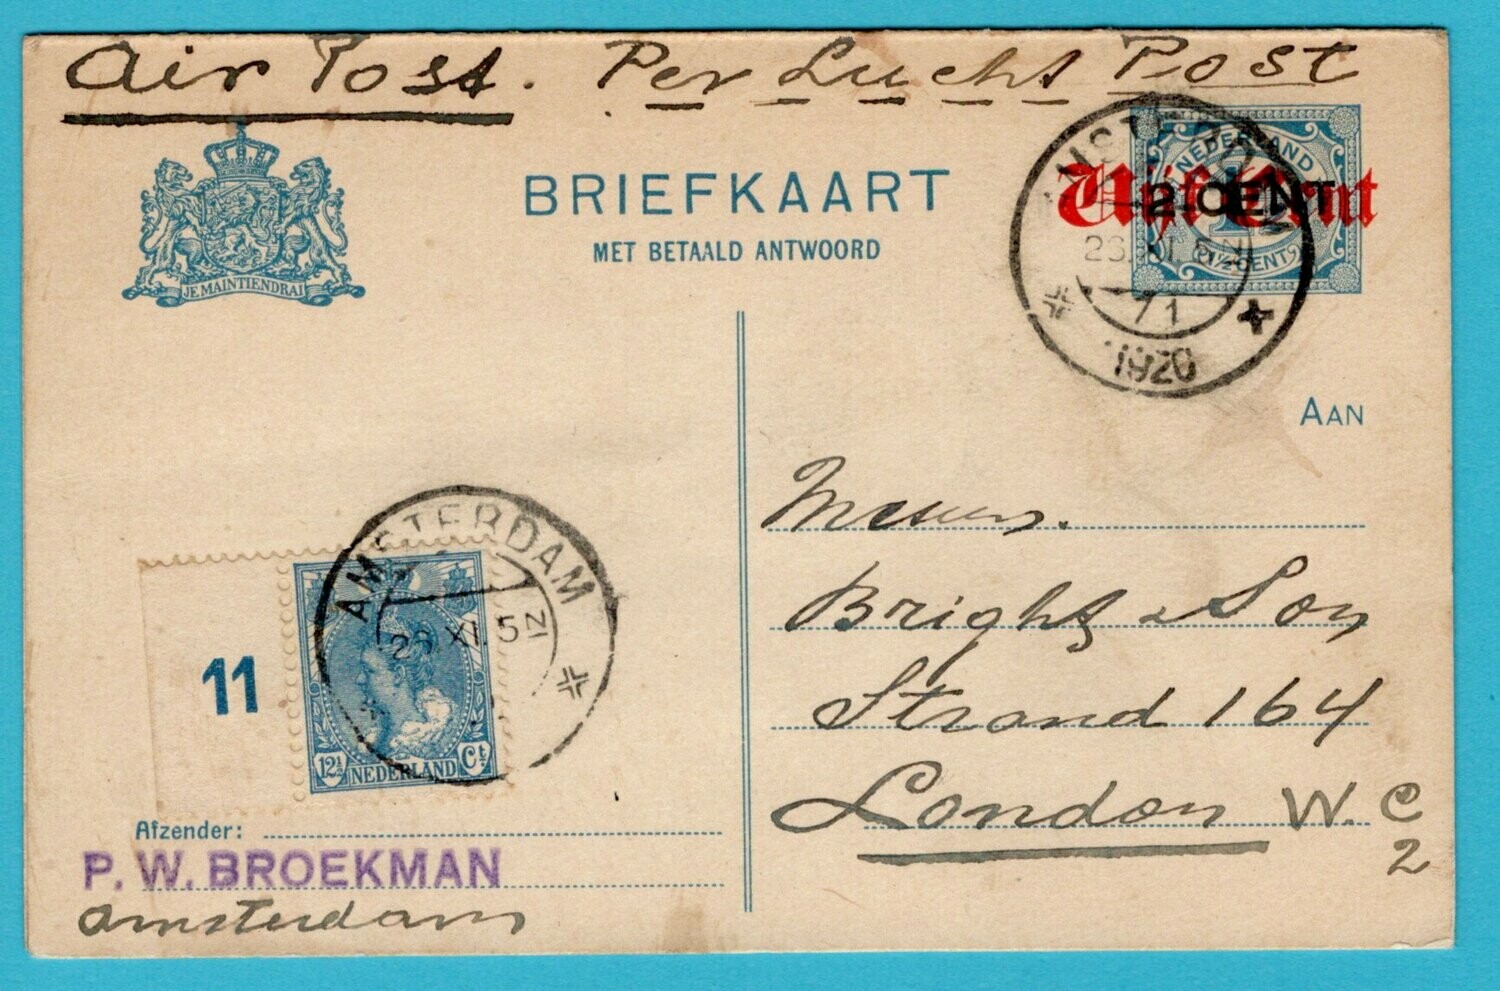 NEDERLAND briefkaart 22-11-1920 Amsterdam naar London